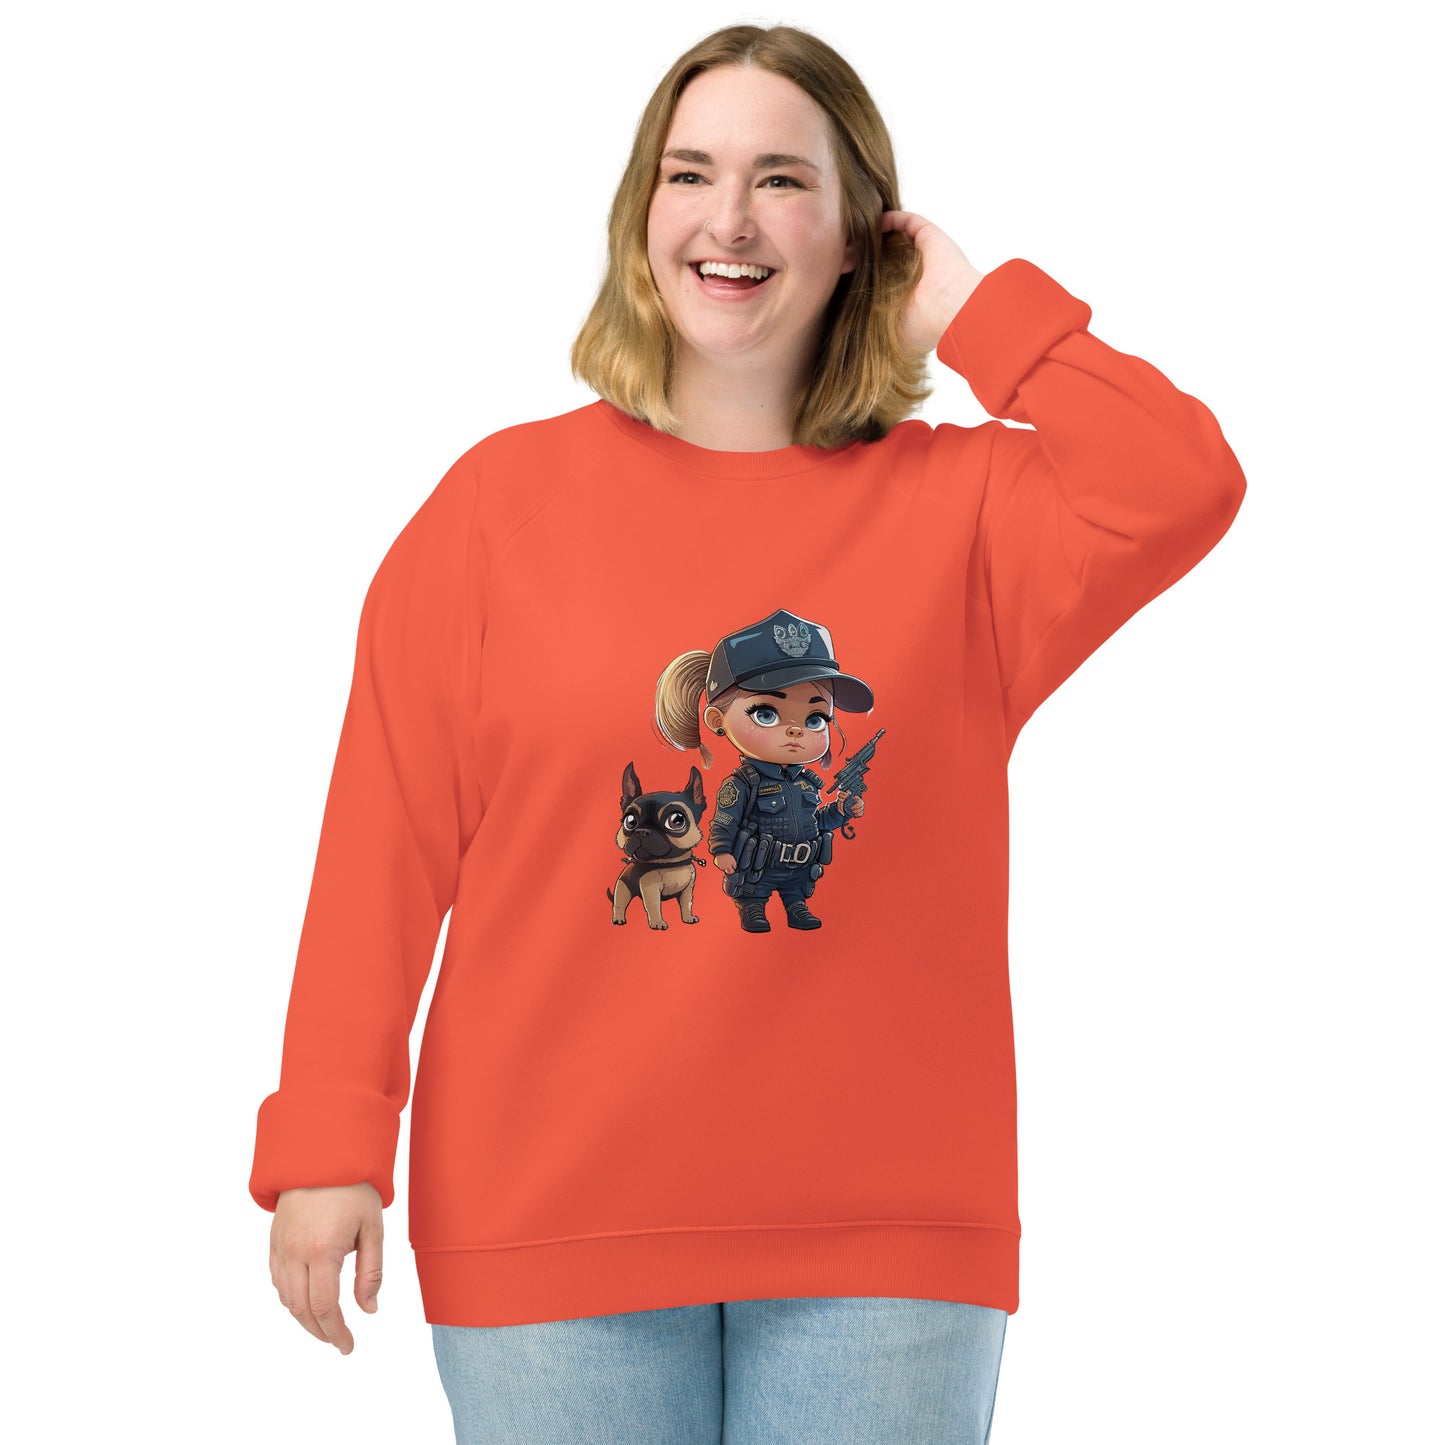 Mini Justice and Barkley on Unisex organic raglan sweatshirt